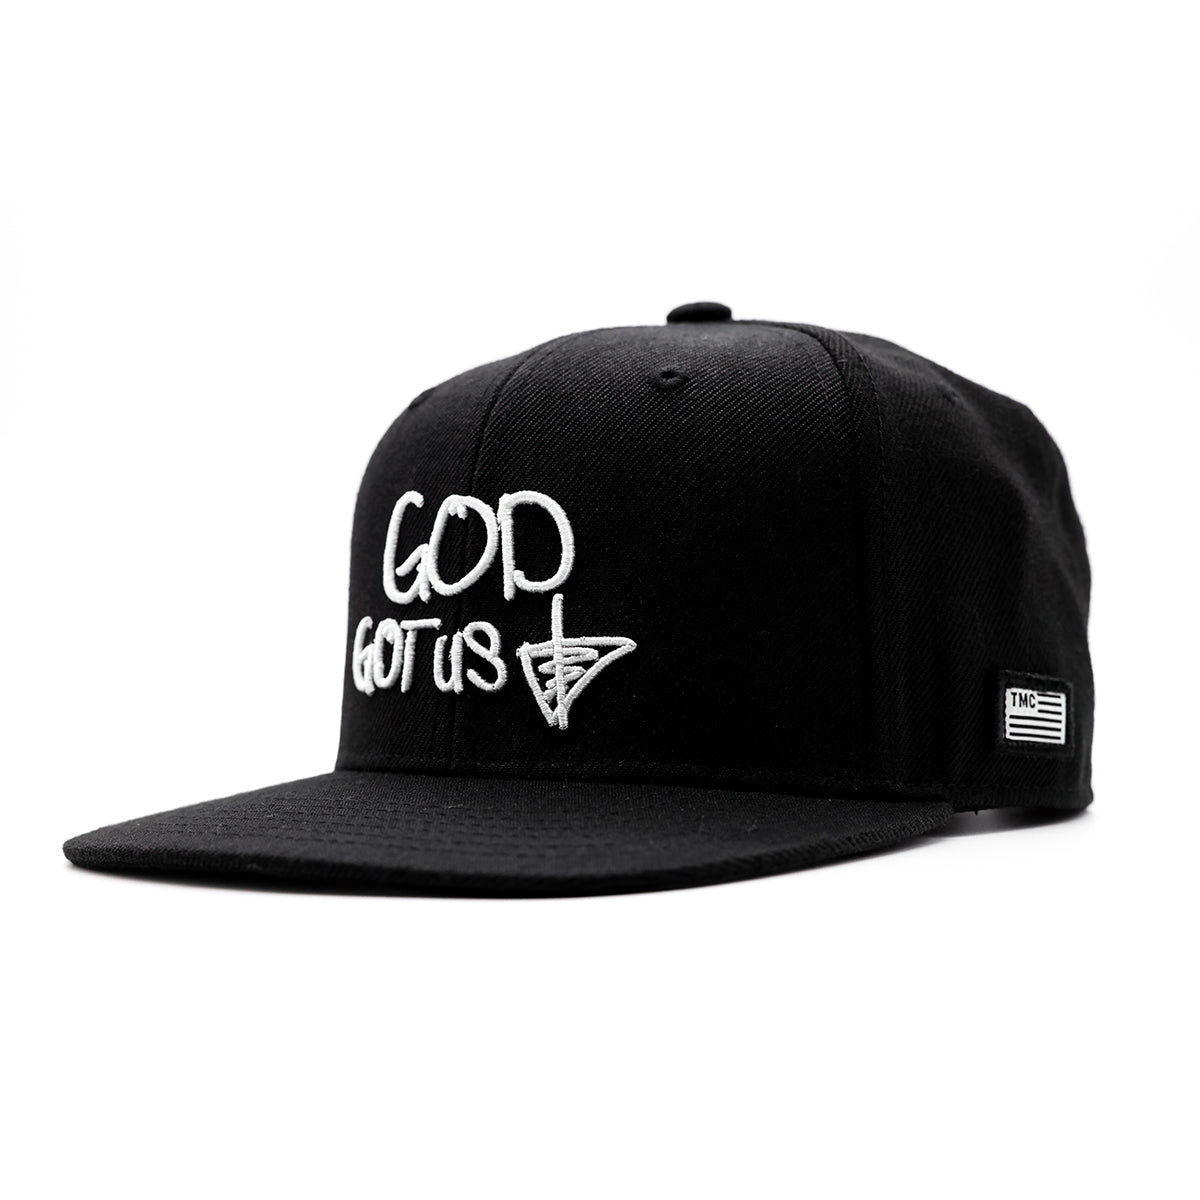 God Got Us Limited Edition Snapback - Black/White - Angle